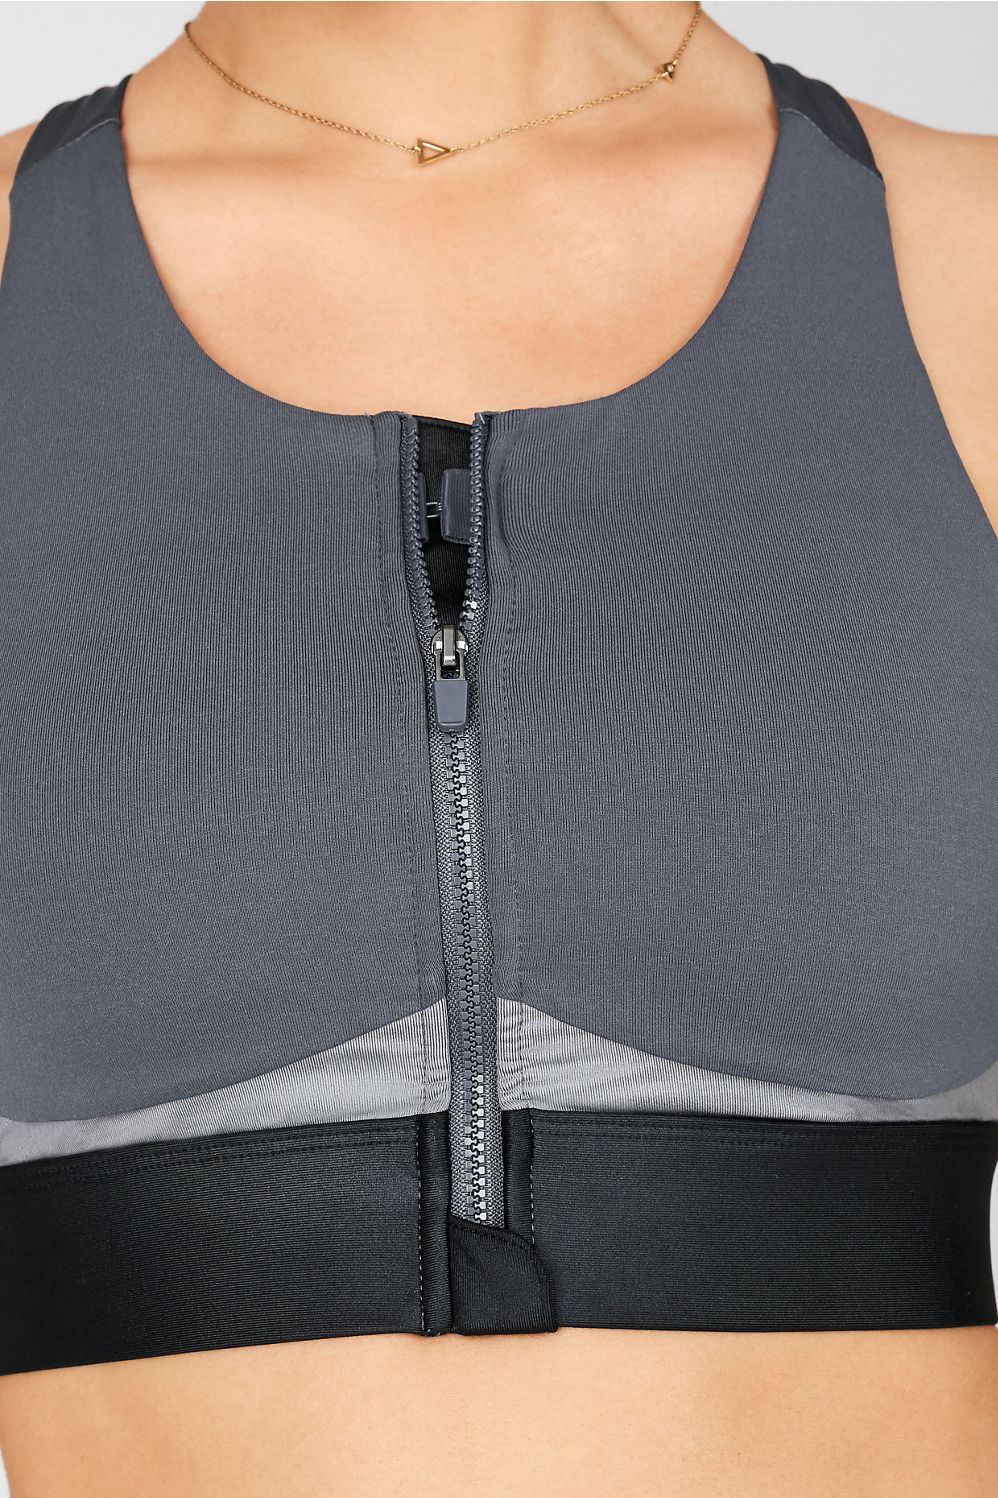 Fabletics, Intimates & Sleepwear, Fabletics Gray Zip Front Sports Bra Size  Medium